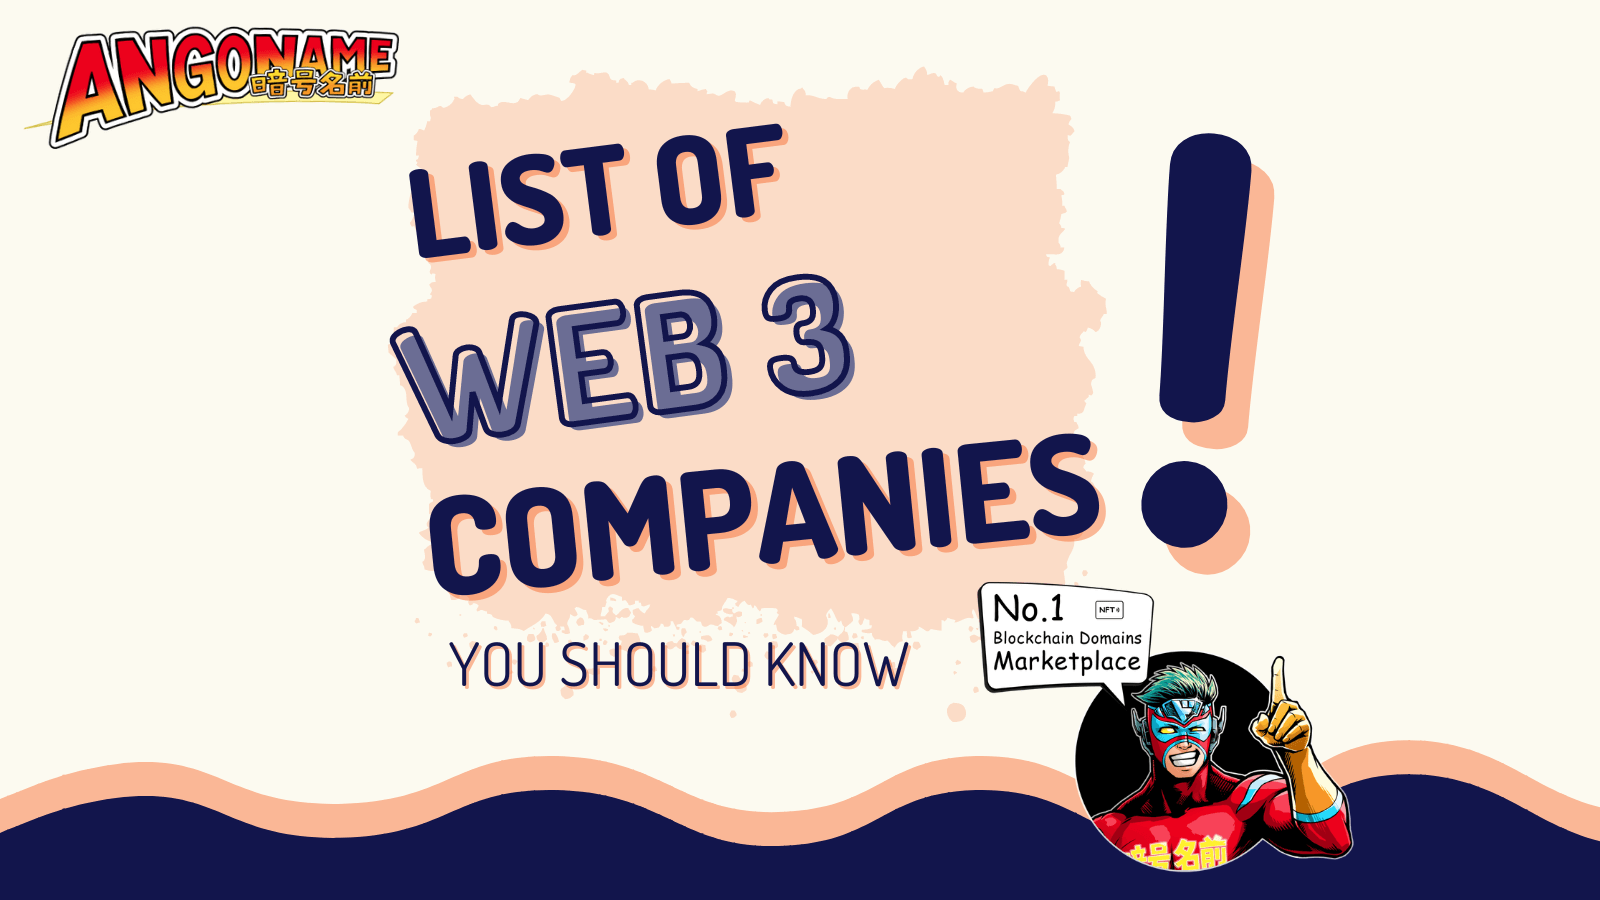 List of Web 3 companies